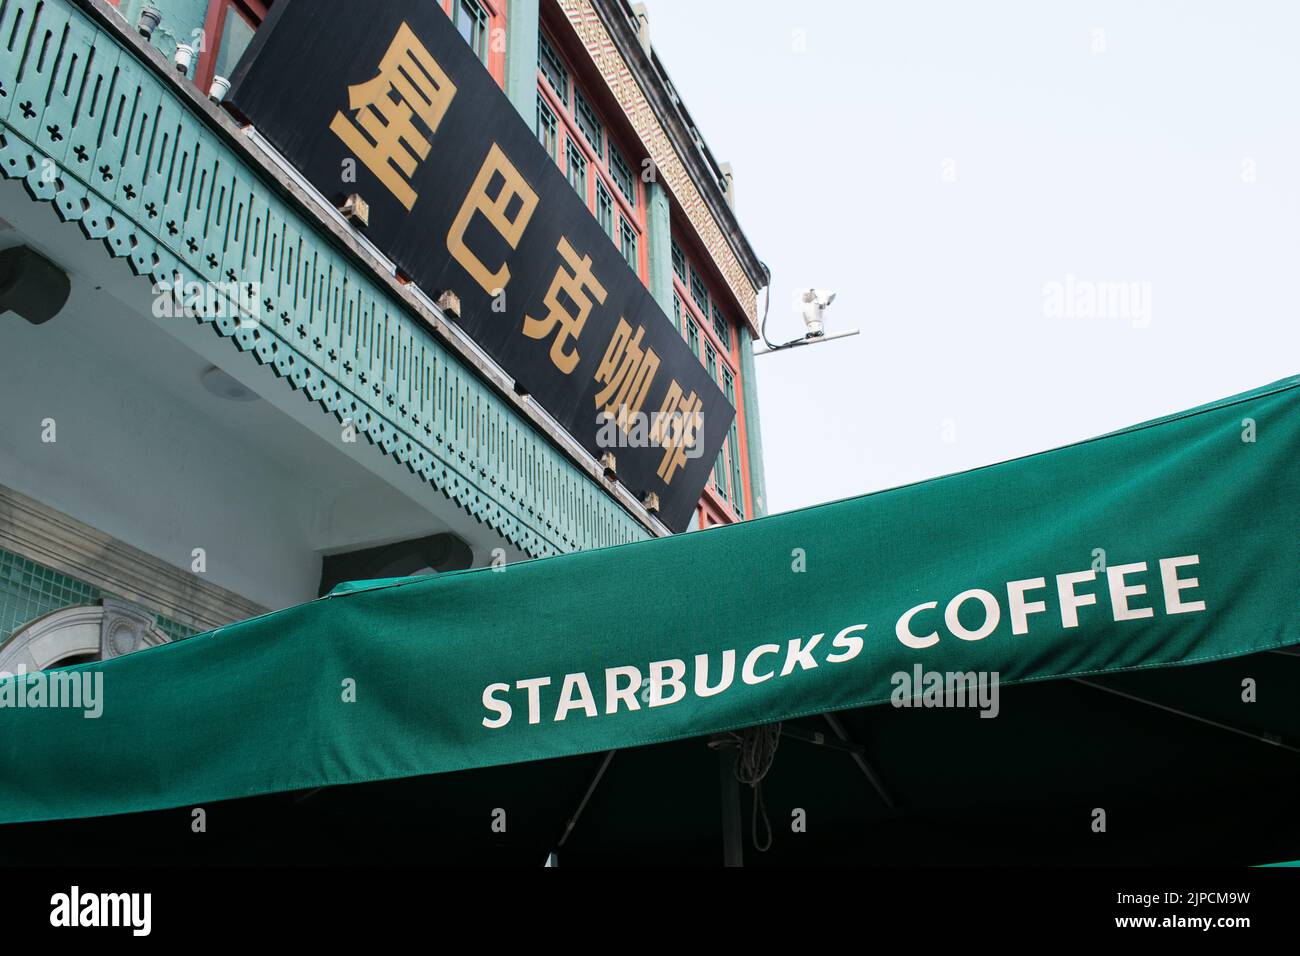 Starbucks coffee shop, sign written in Chinese and English - Qianmen Street, Beijing. Stock Photo